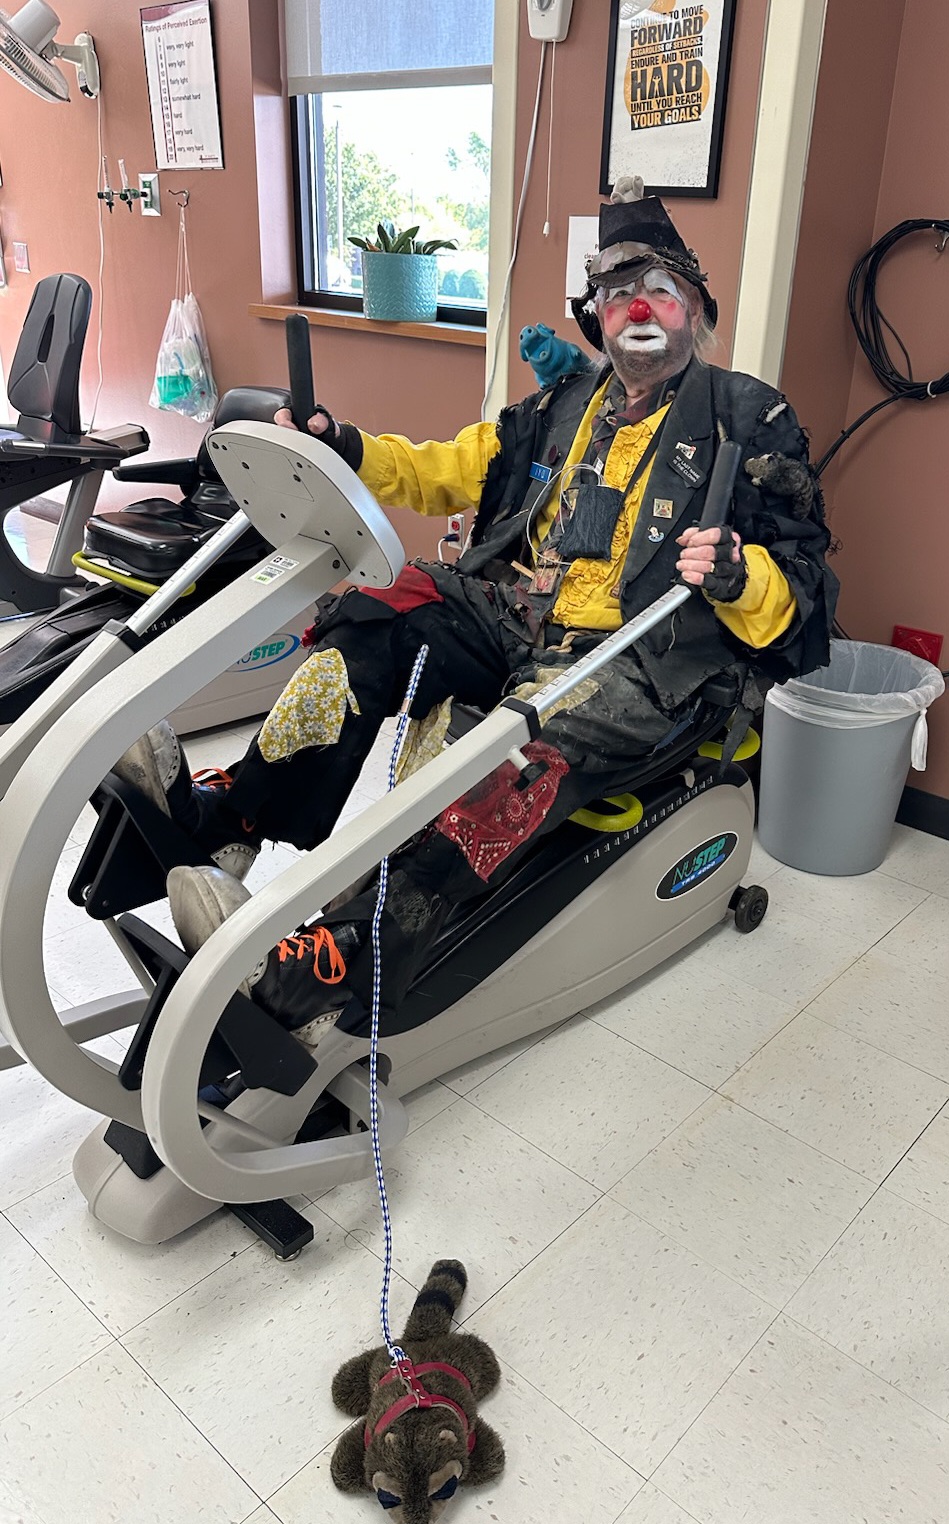 clown rehab bike - St. Mary’s Medical Center